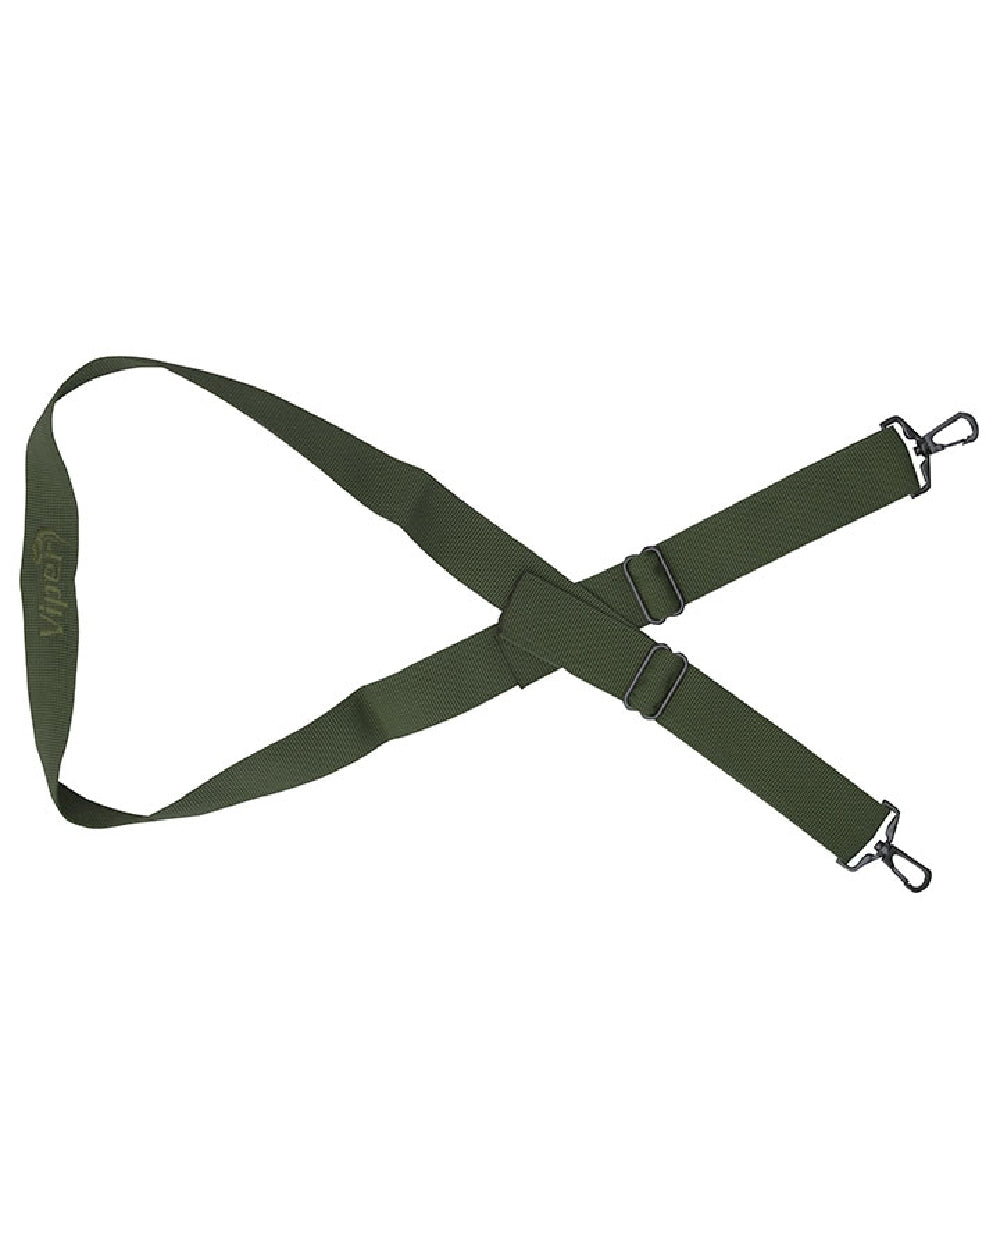 Viper Basic Rifle Sling in Green 